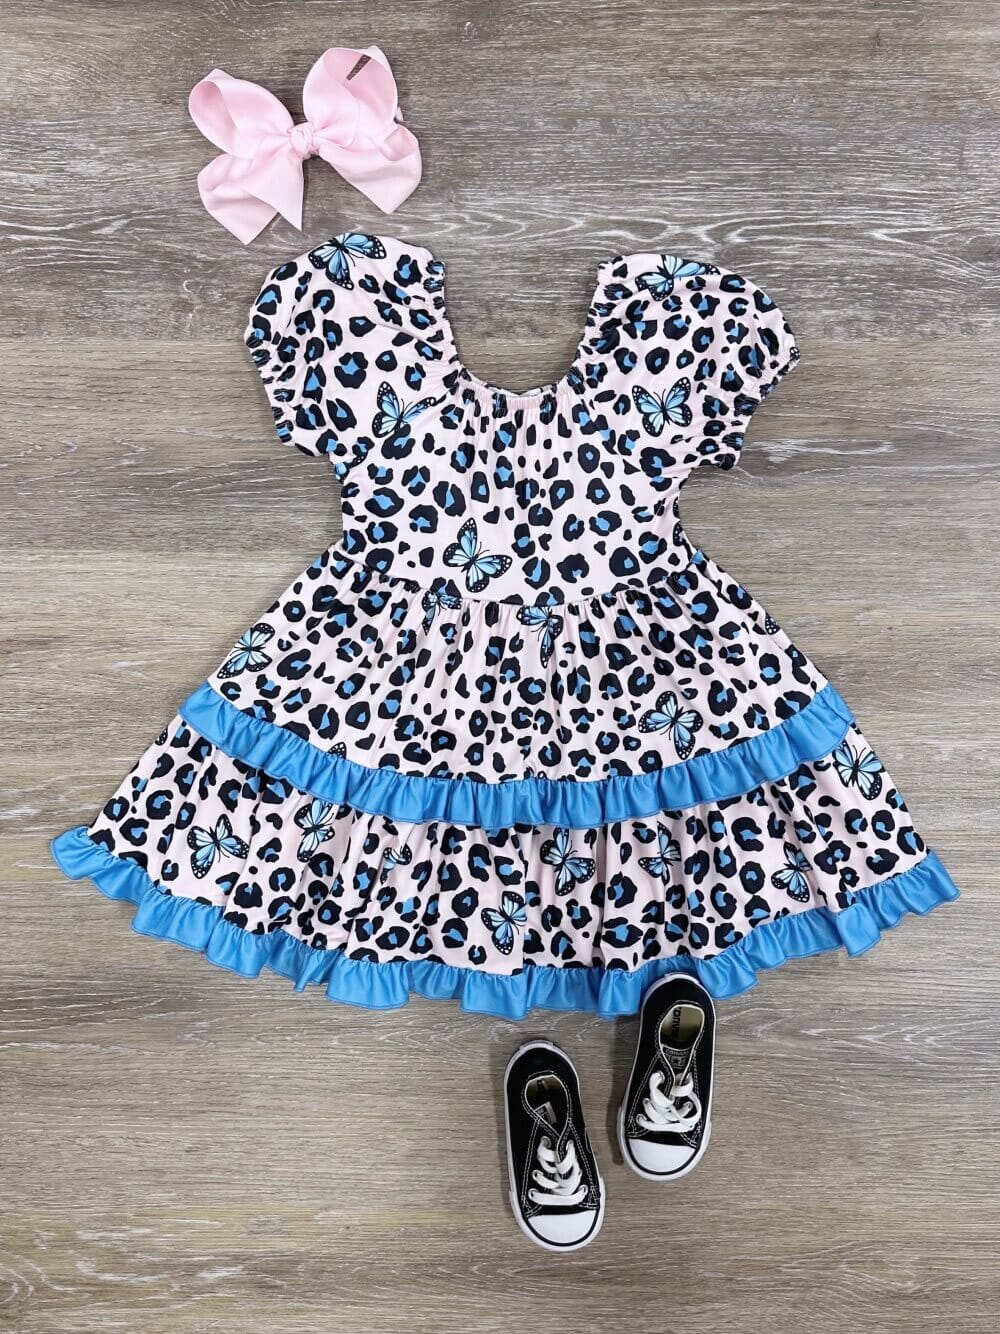 Wild Butterfly Blue Ruffle Animal Print Girls Dress - Sydney So Sweet